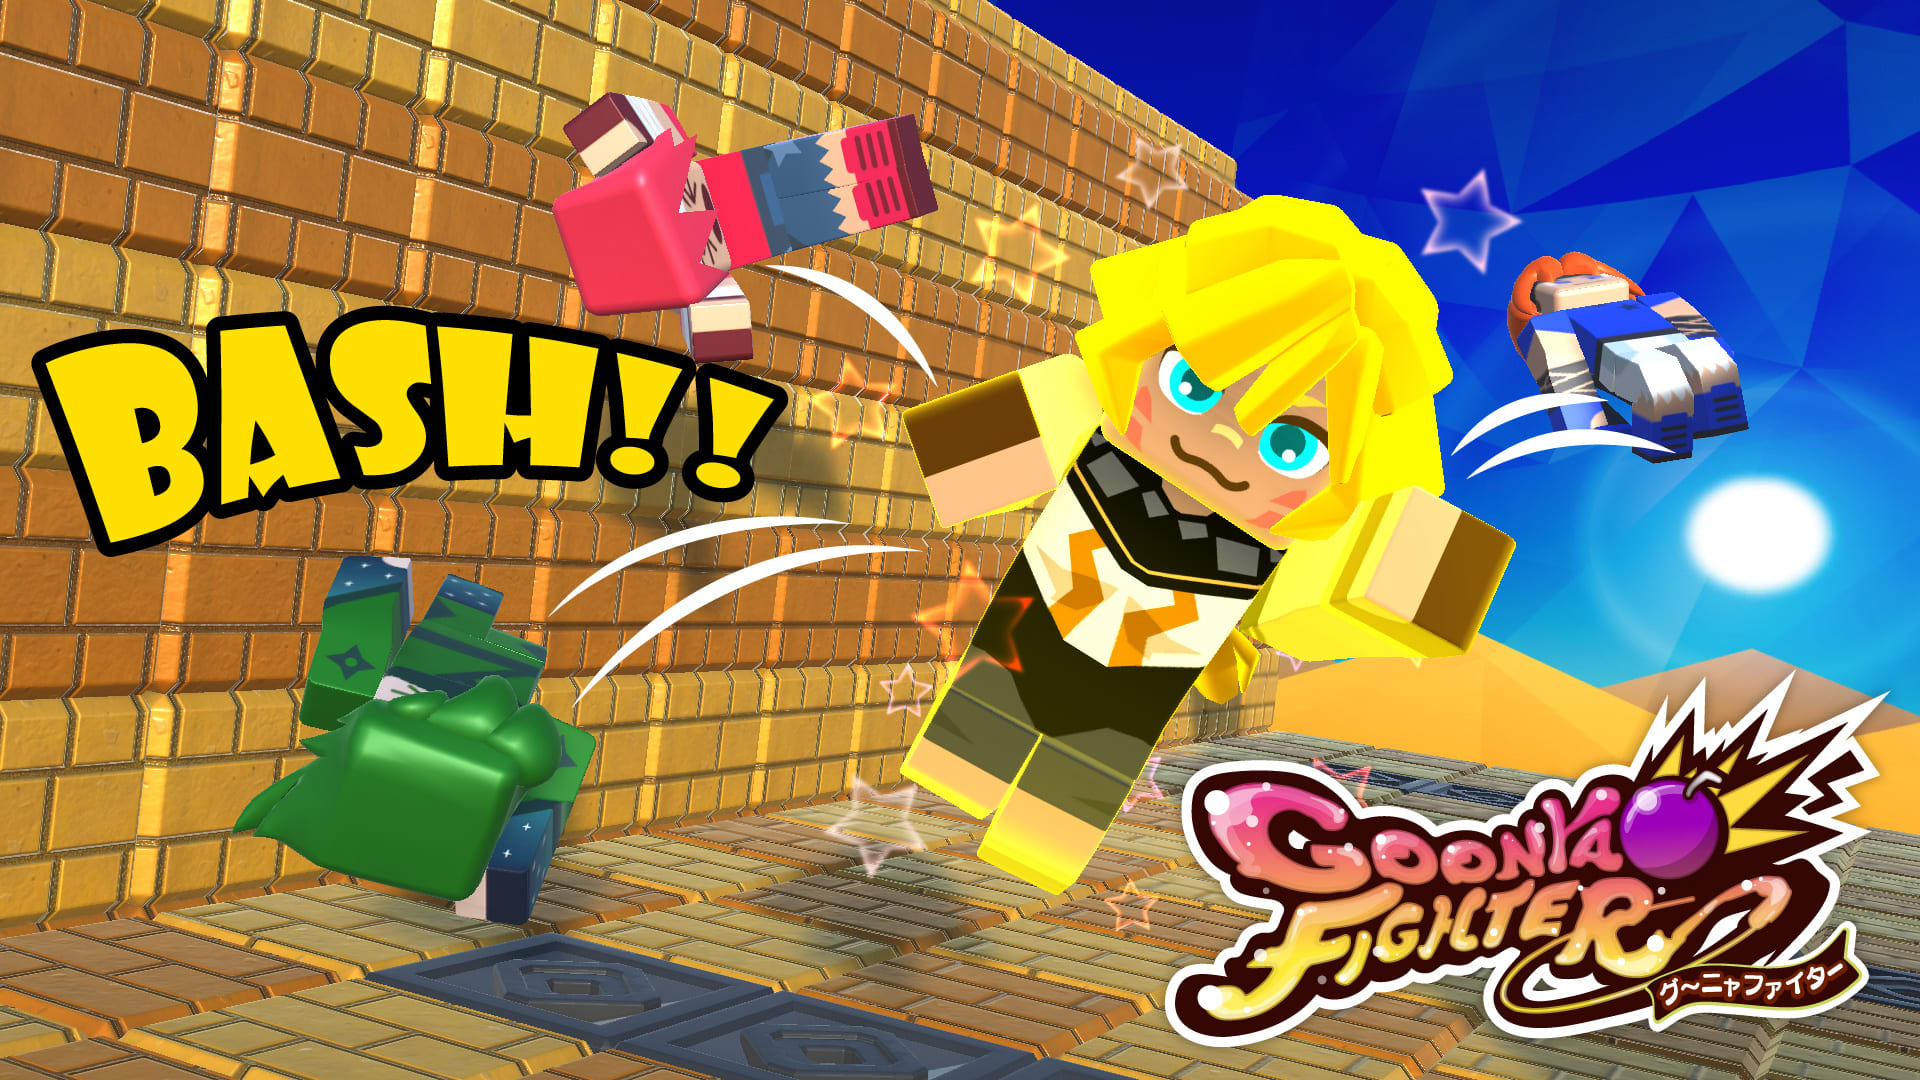 New battle style: "Super Untouchable Goonya Fighters!!"